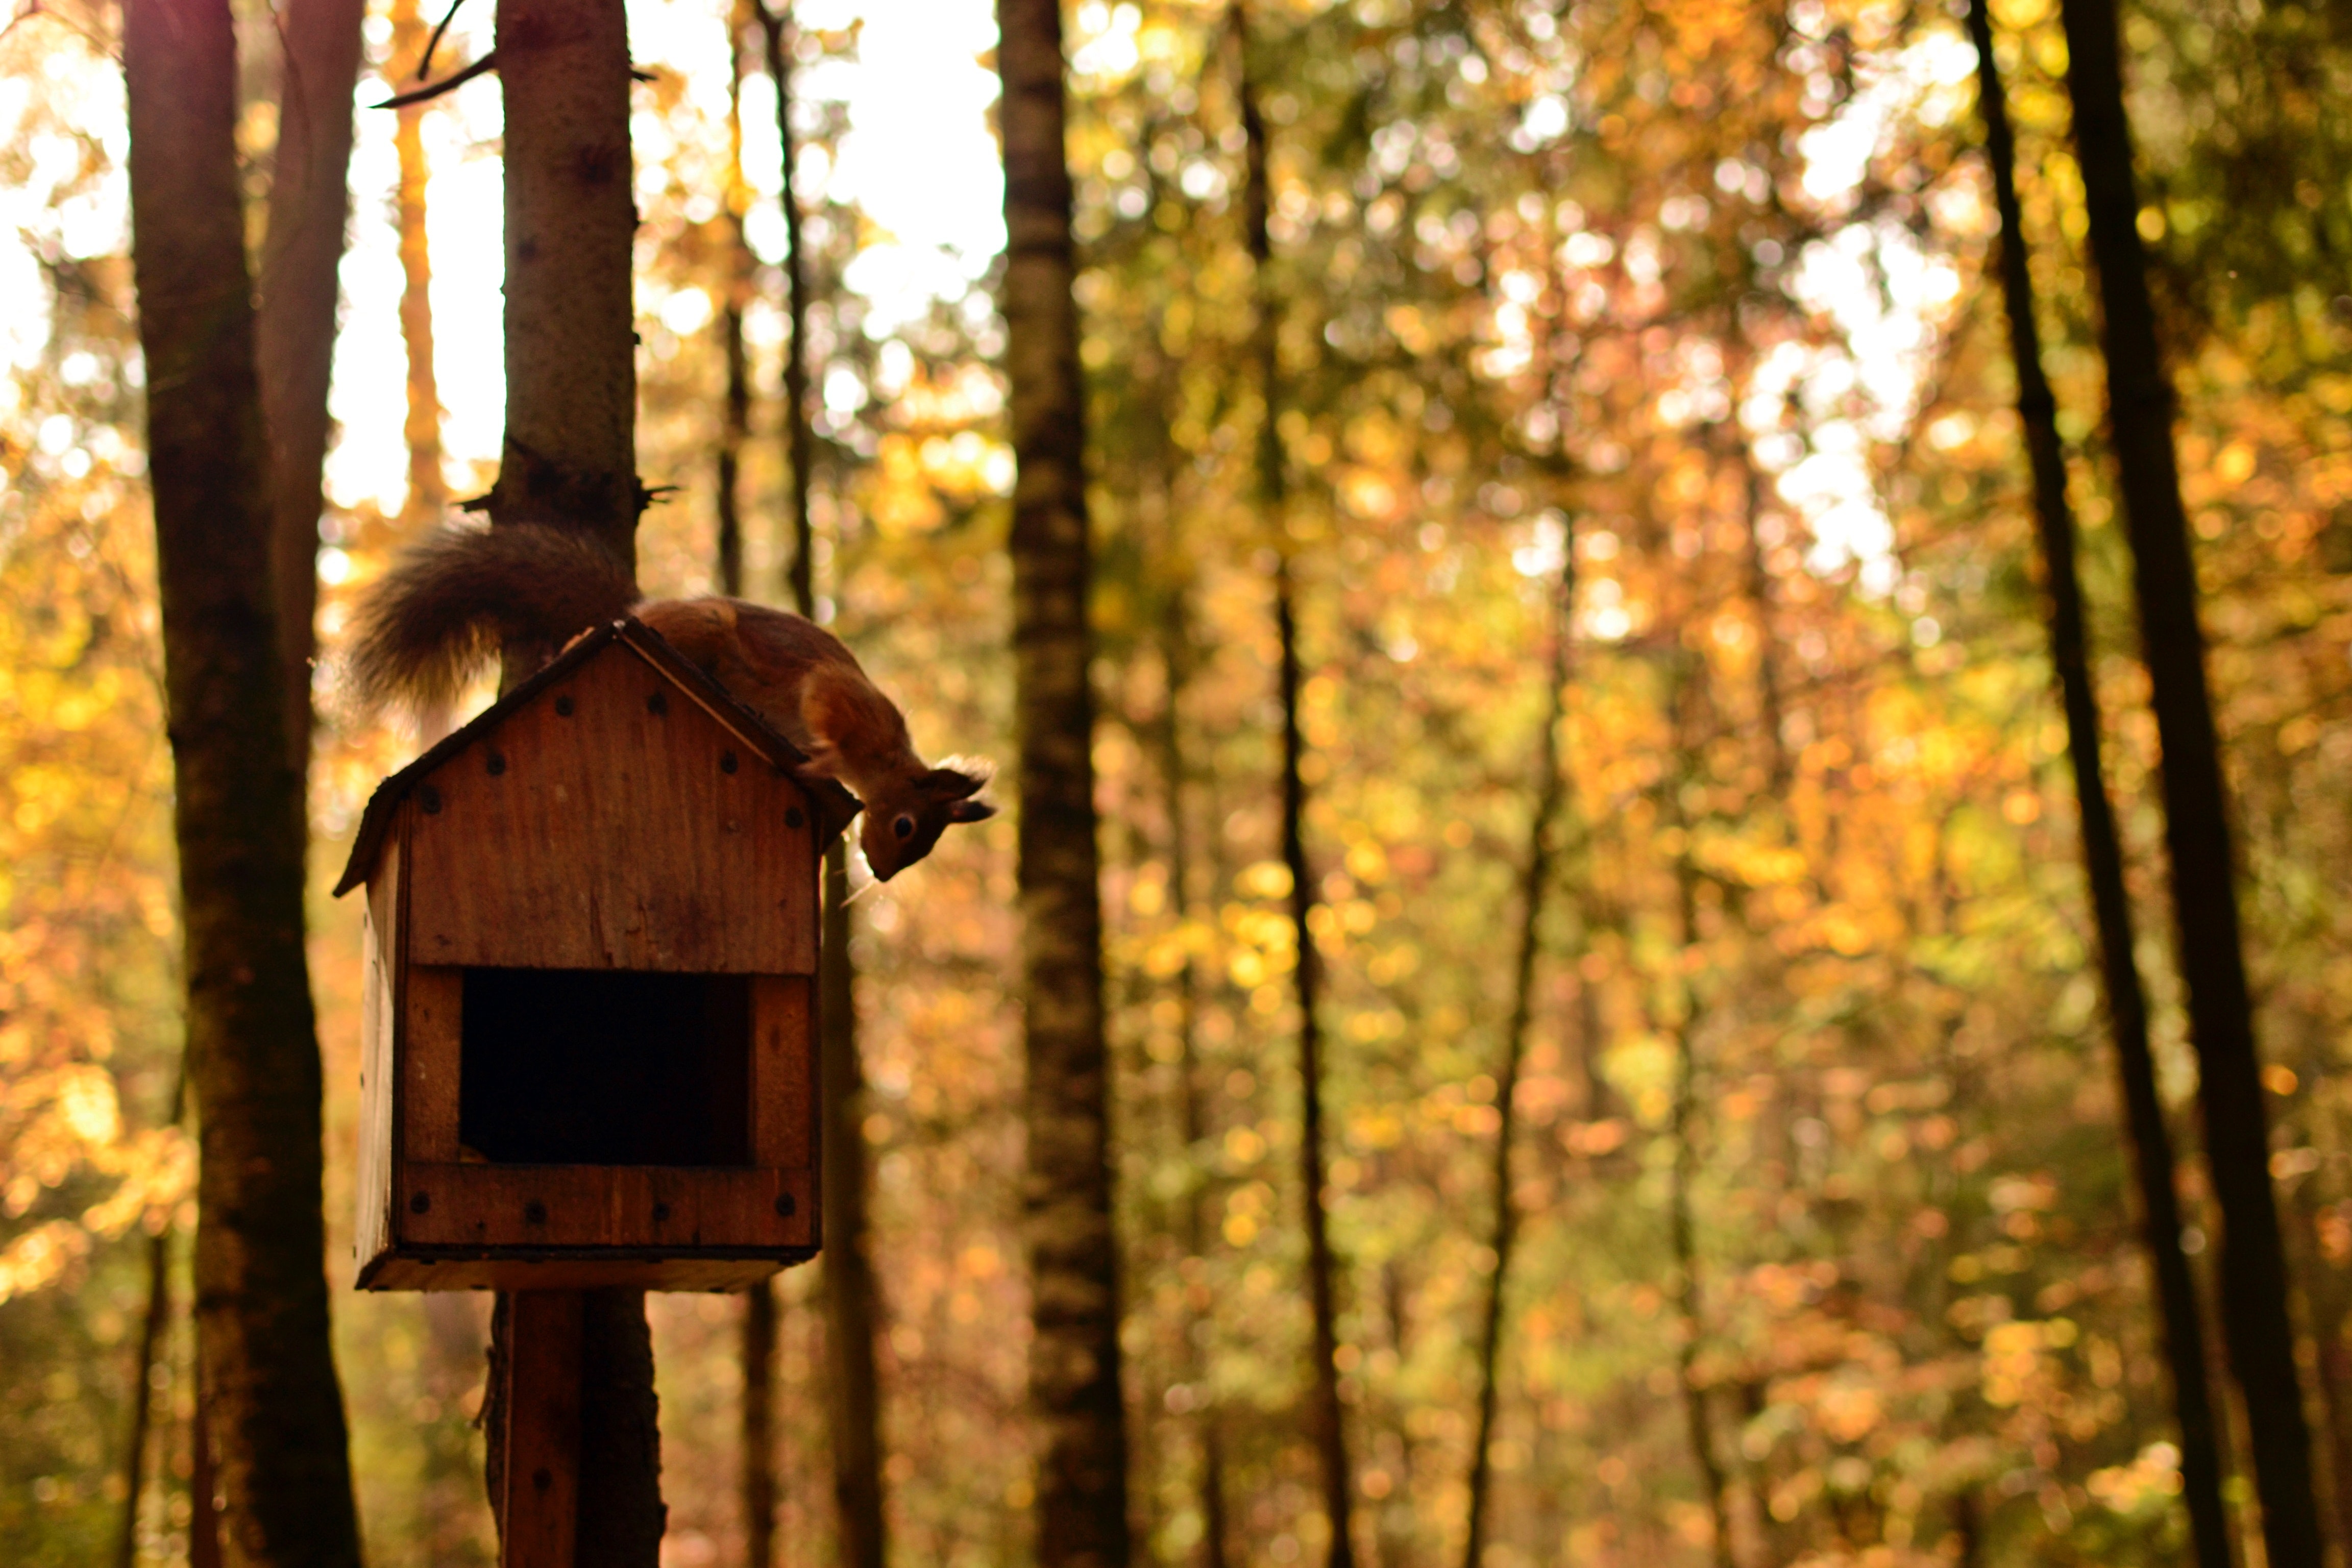 A squirrel on a bird feeder in the fall